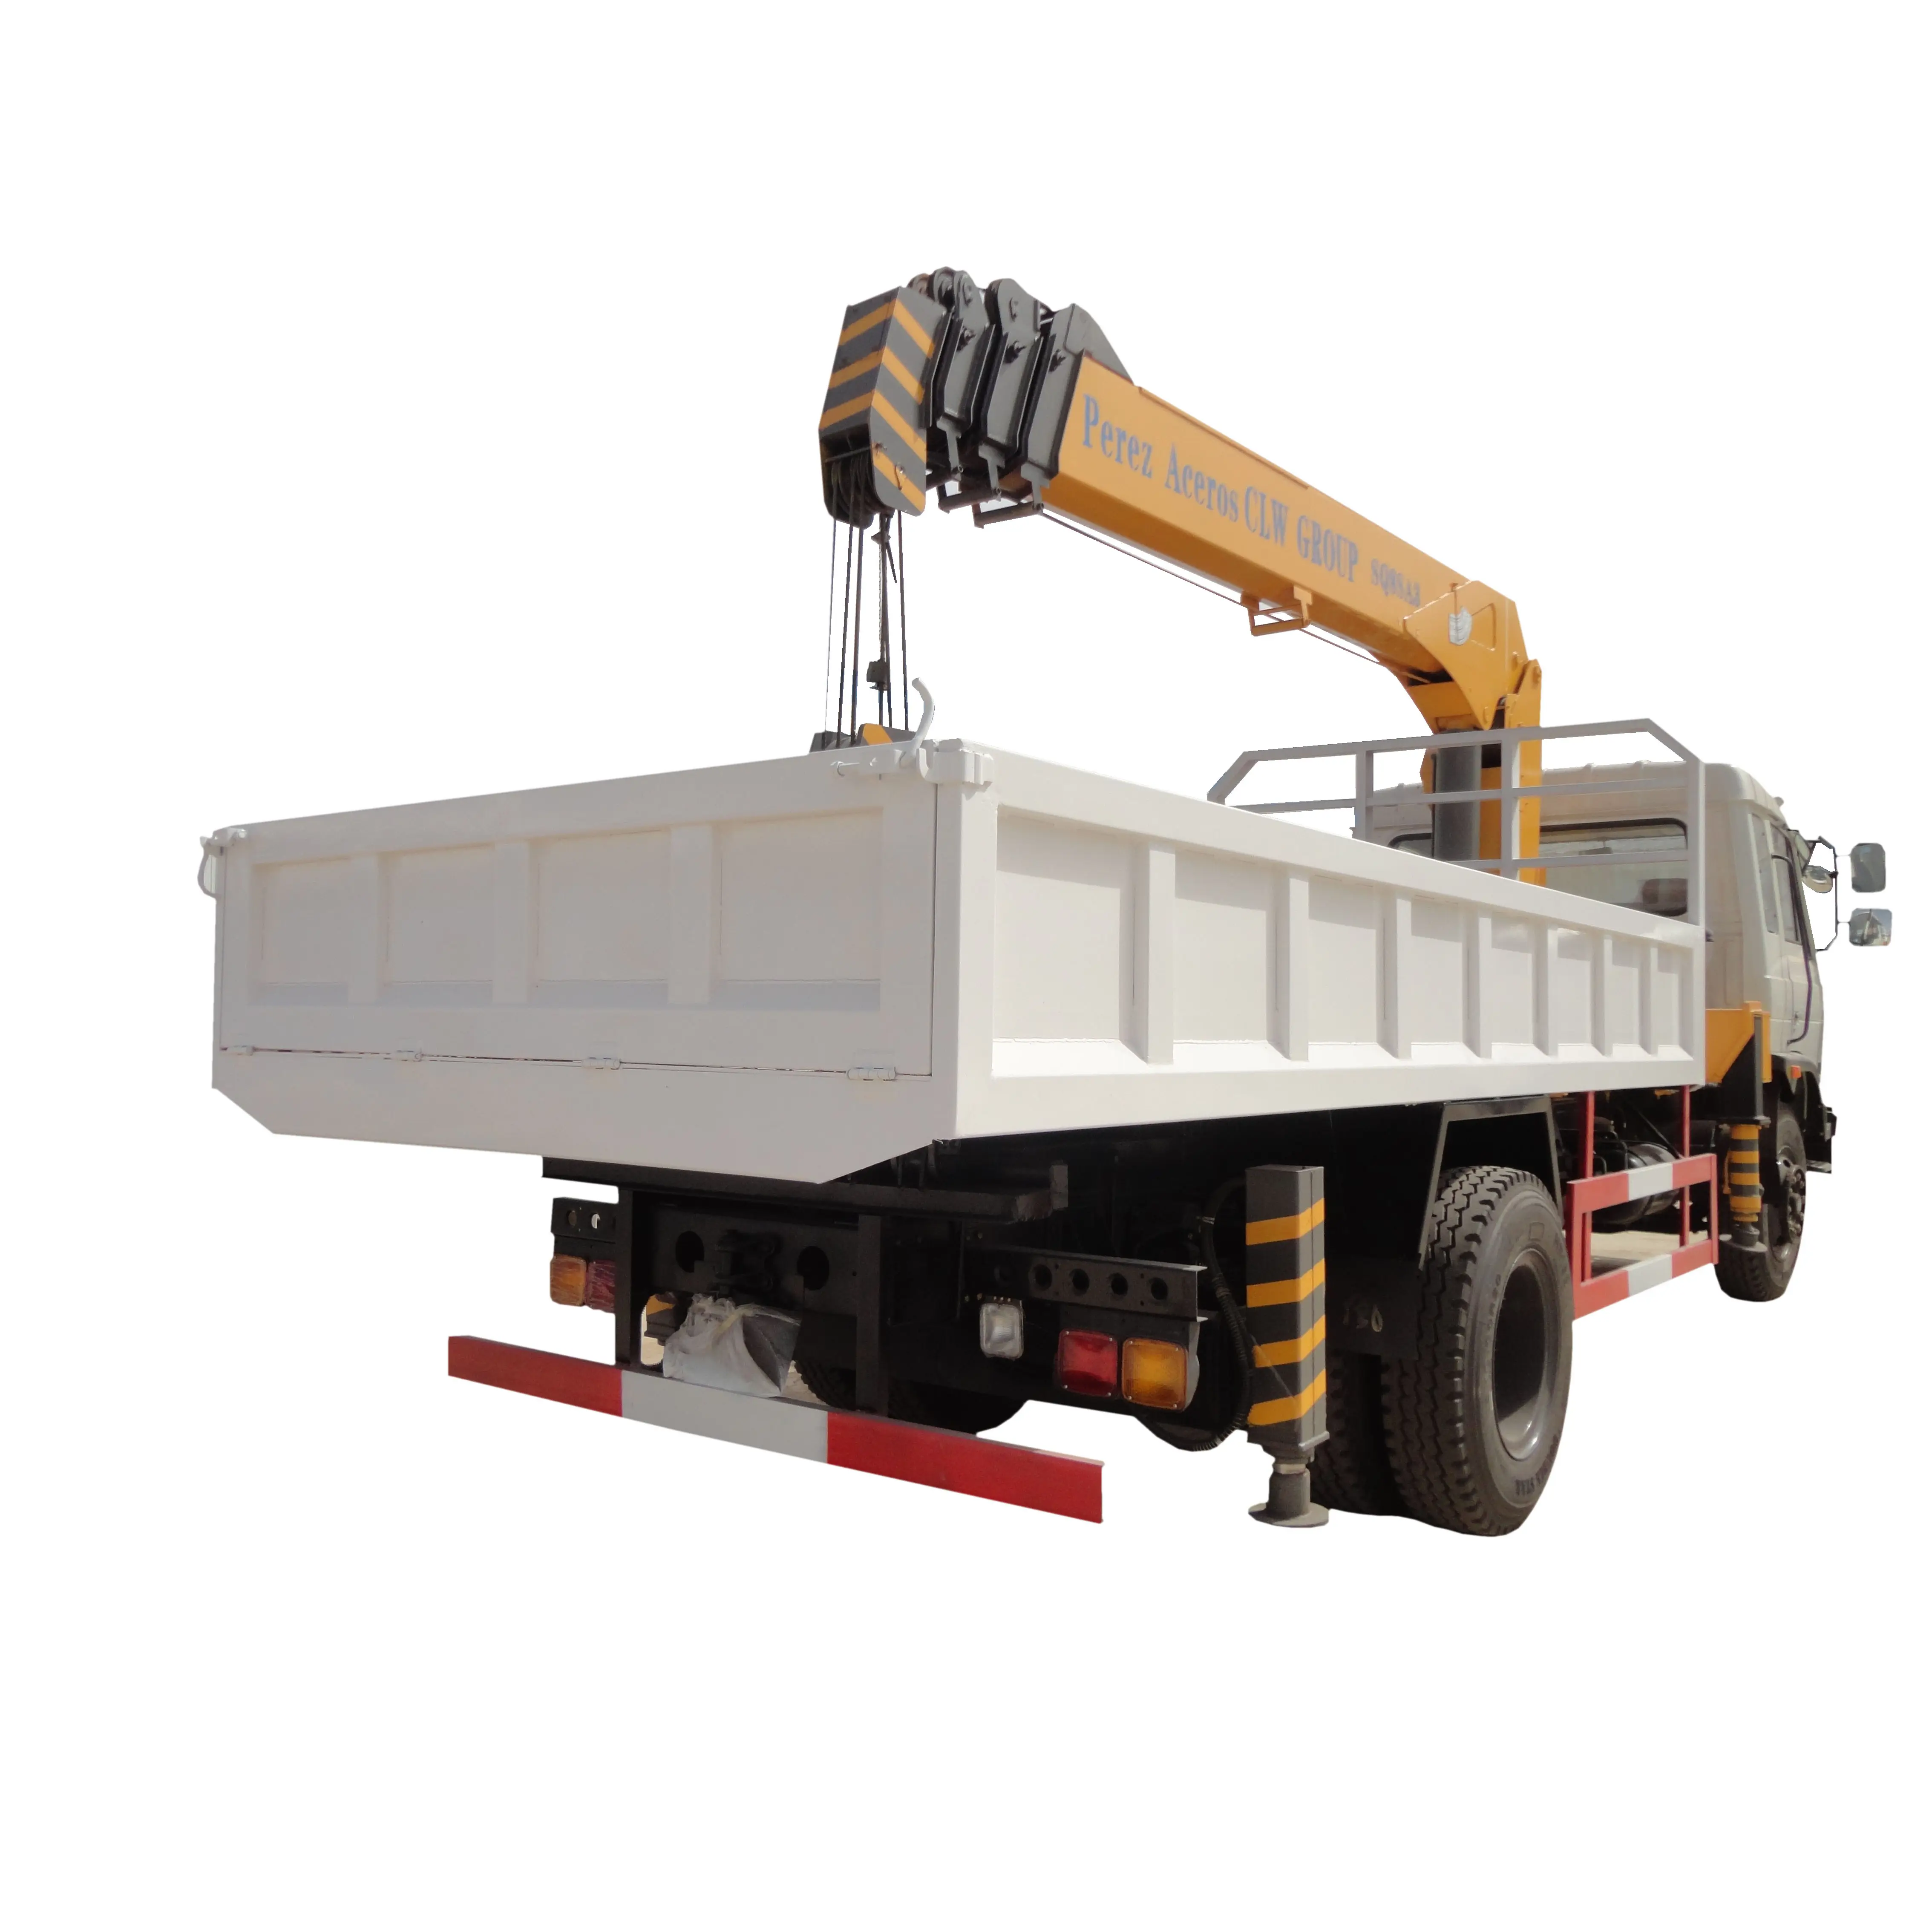 CLW ยี่ห้อ hydraulic bucket แขนเครนรถบรรทุกข้อมูลจำเพาะยกตะกร้า self loader 8 ตันบูมรถบรรทุกเครน